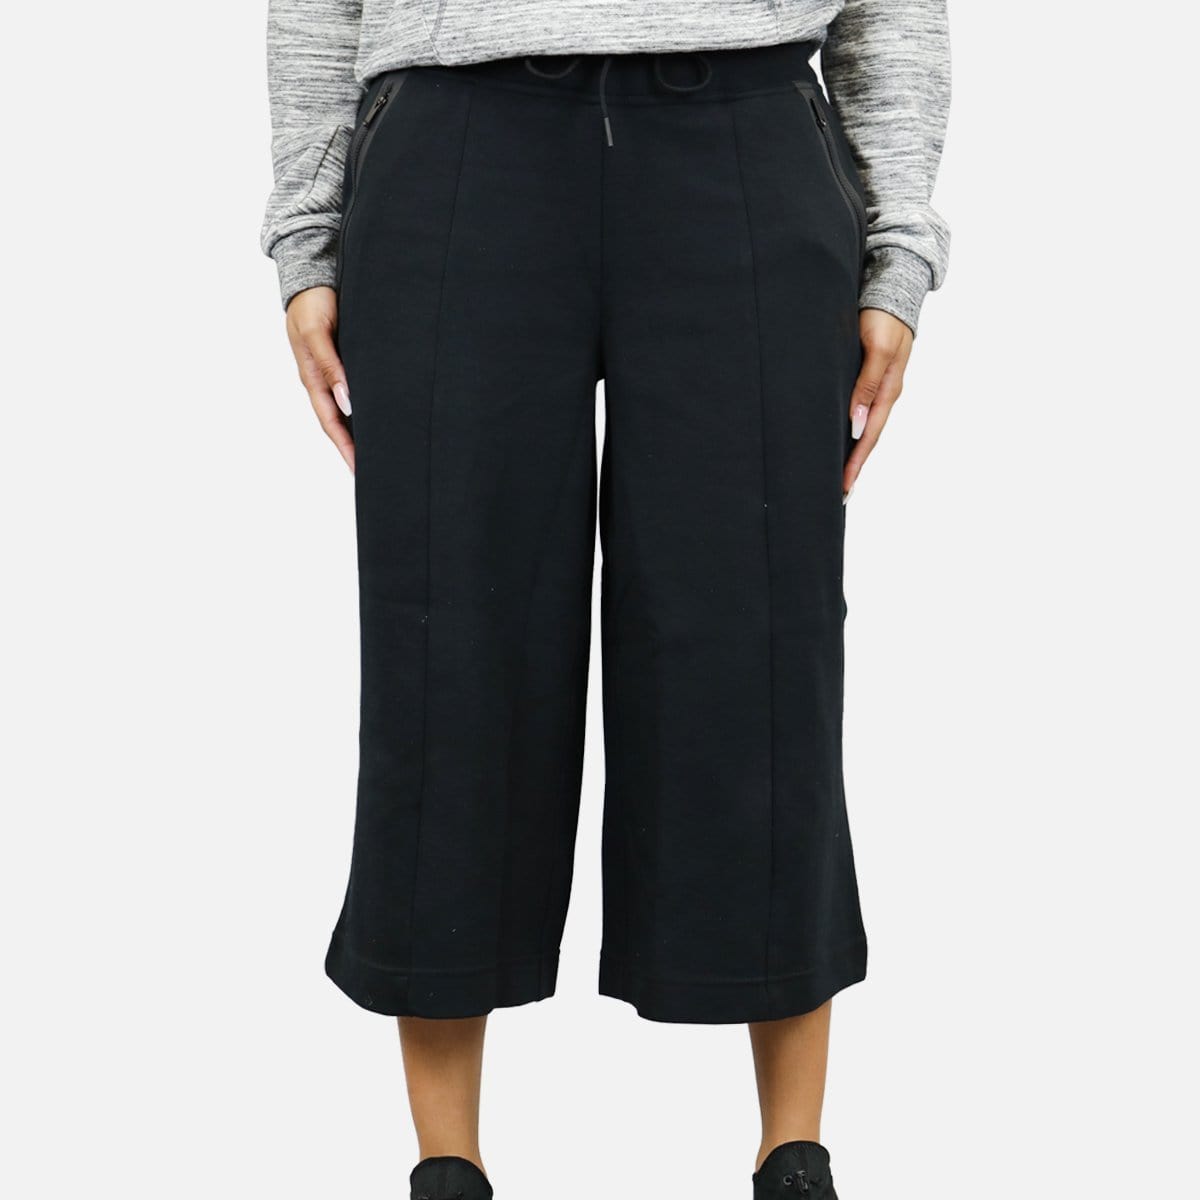 Nike Tech Fleece Capri Pants (Black/Black-Black)